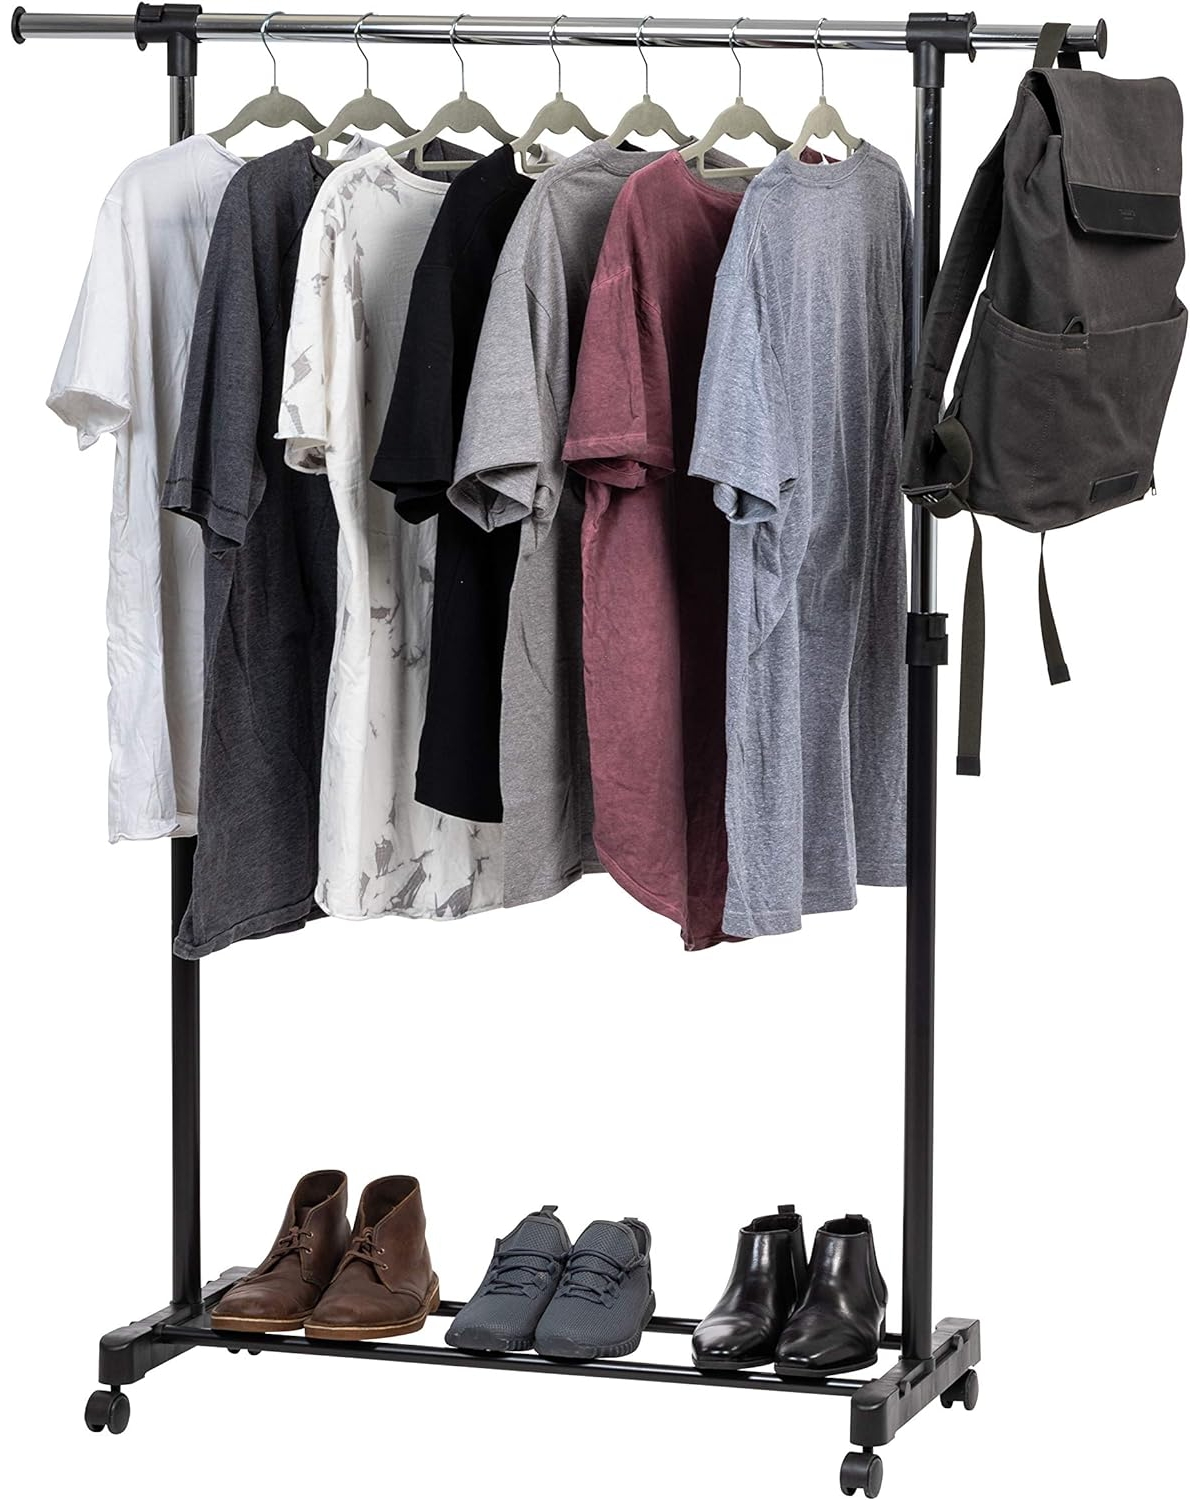 Adjustable and Extendable Single-Rod Clothes Garment Rack - Black